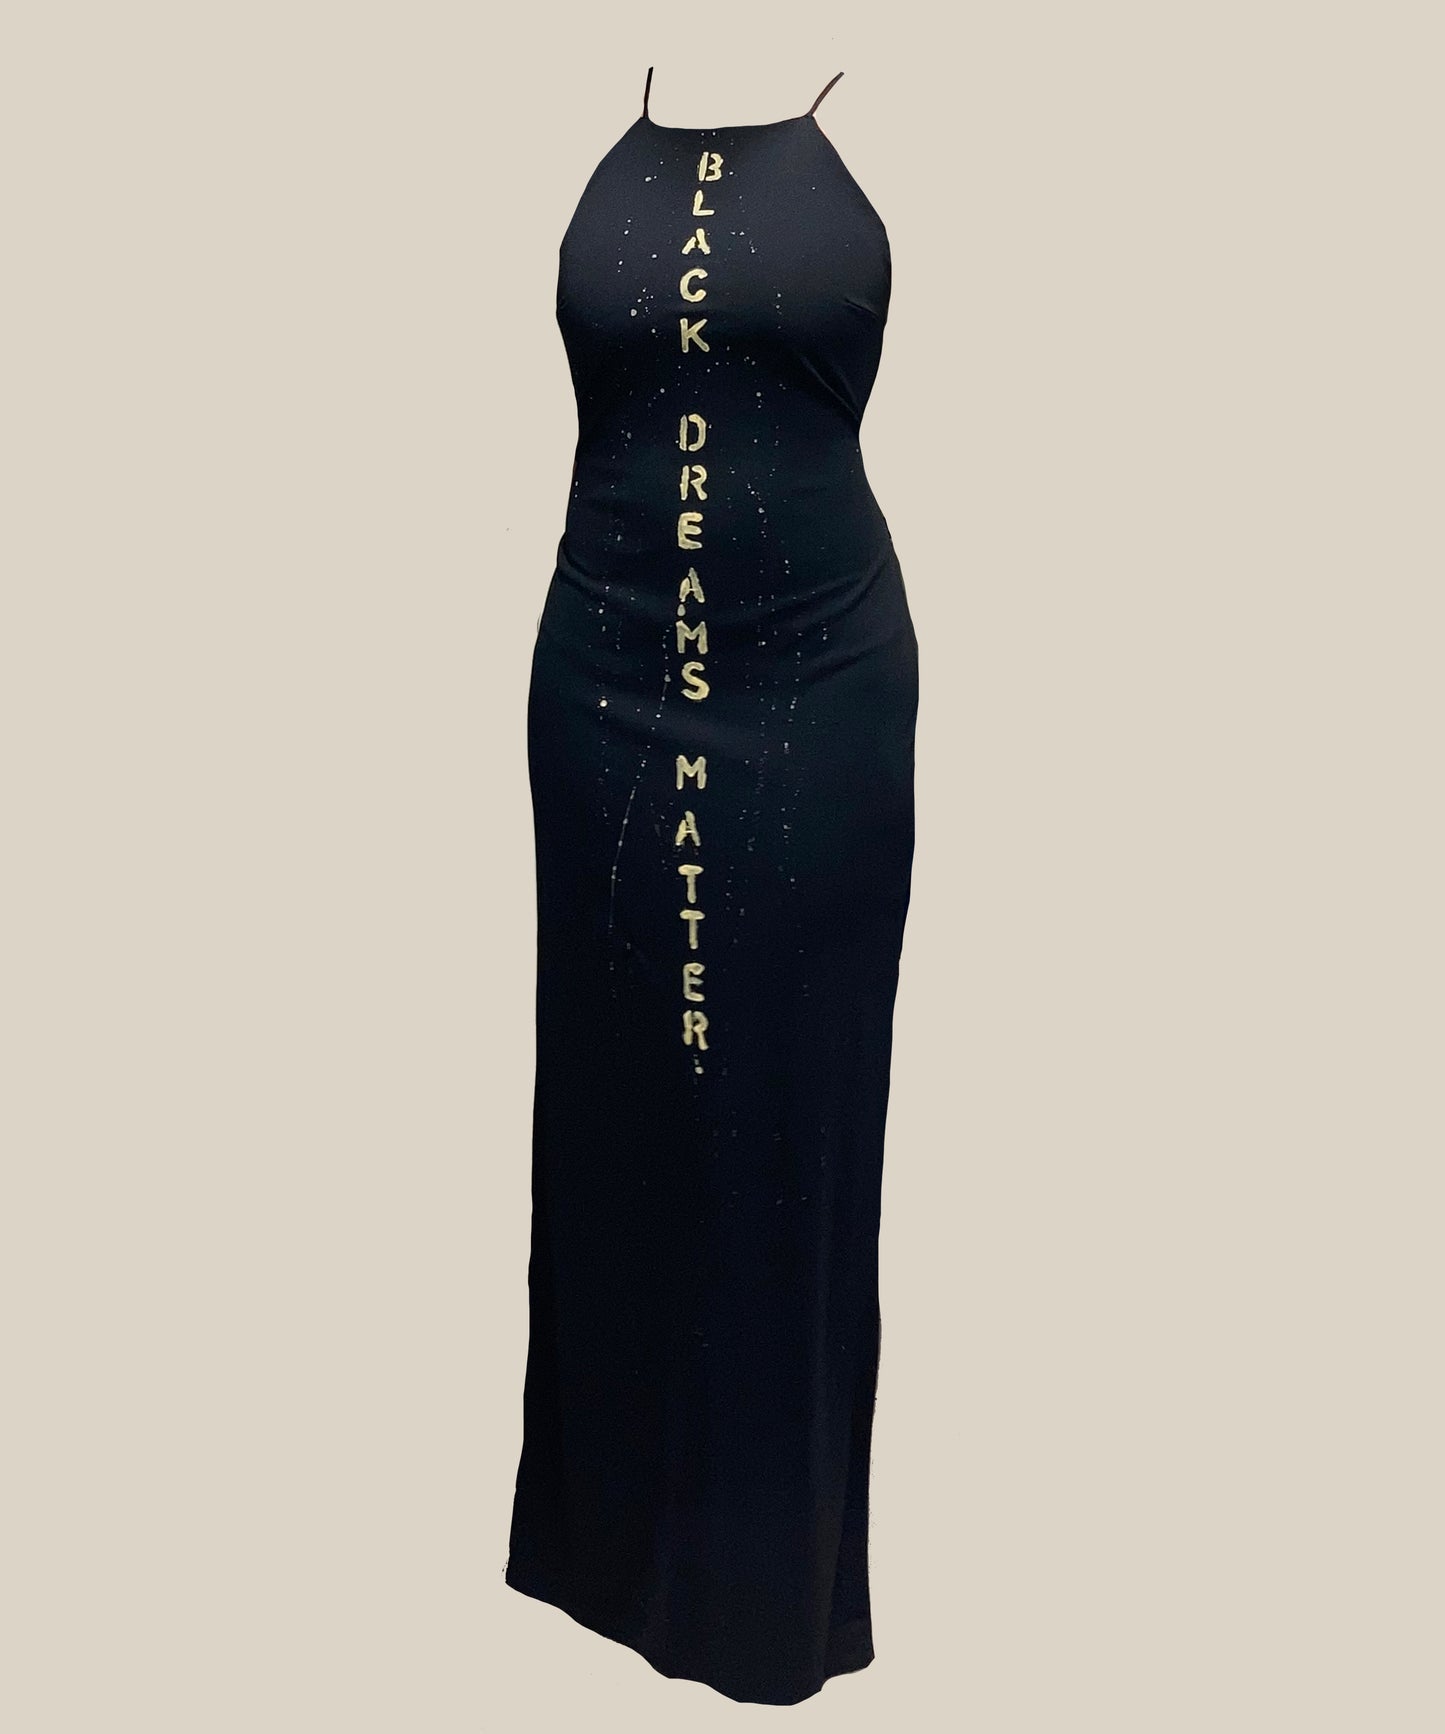 'Black Dreams Matter' Strappy Dress